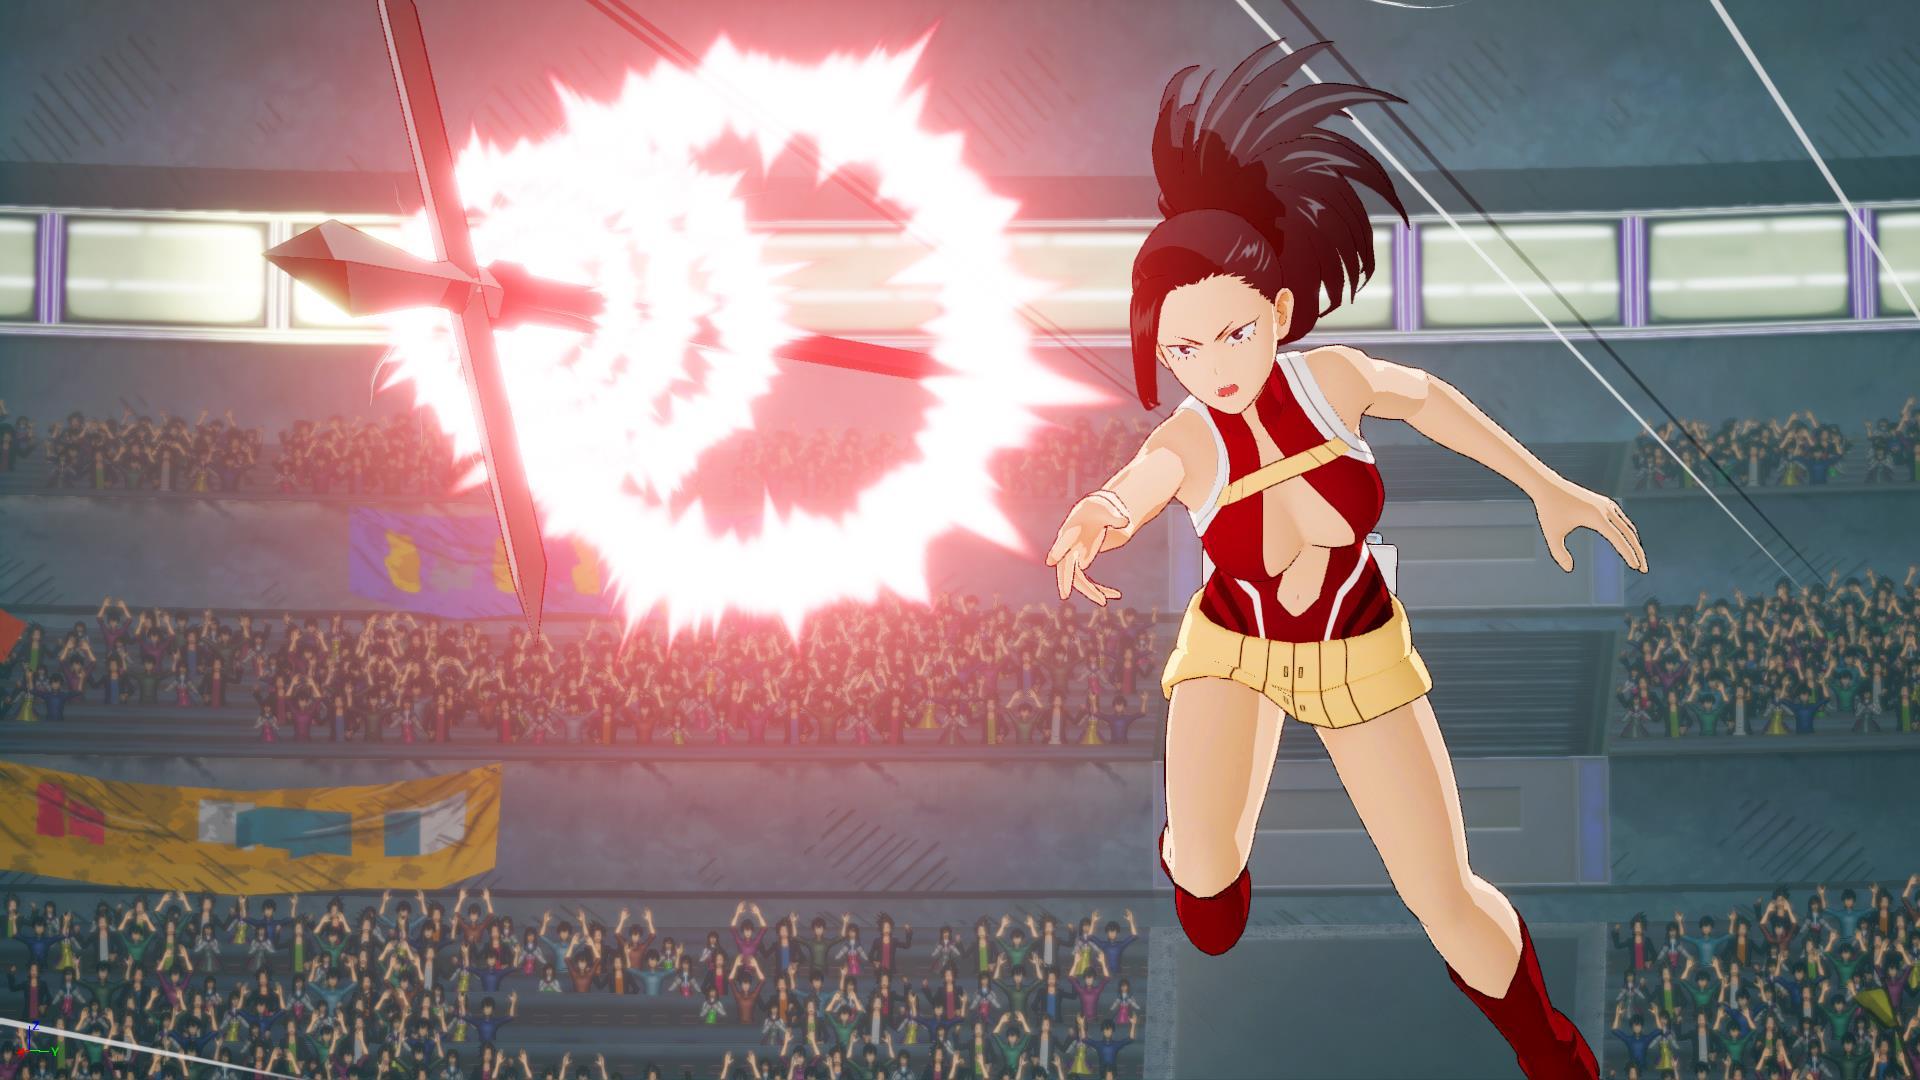 My Hero Academia: One's Justice screenshots feature Tsuyu Asui